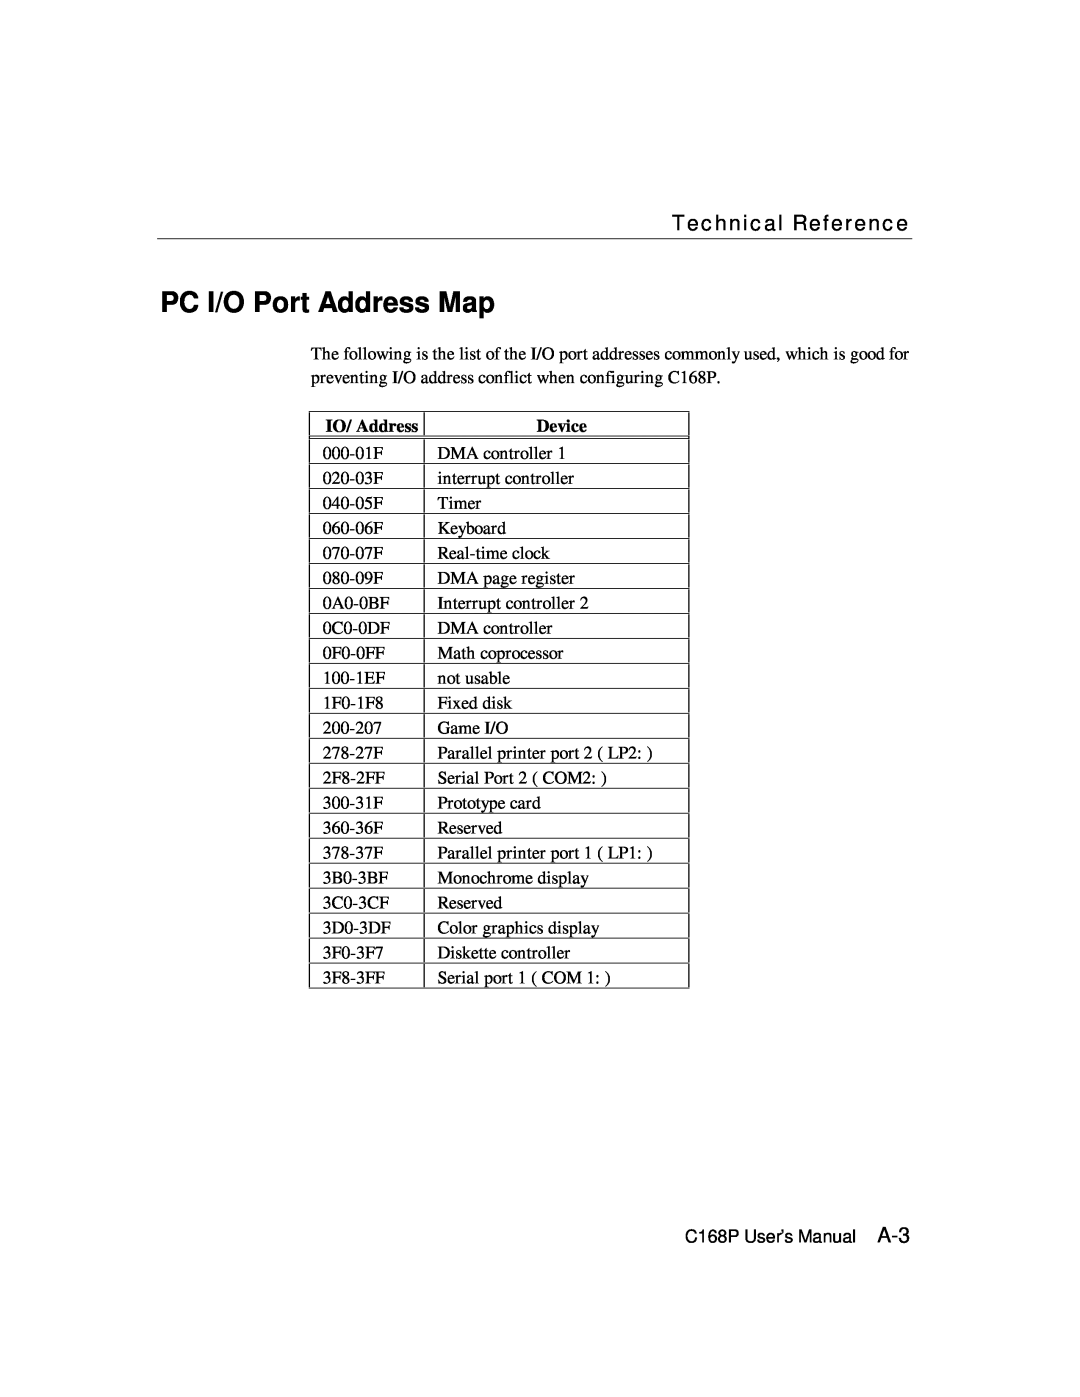 Moxa Technologies C168P user manual PC I/O Port Address Map, Technical Reference, IO/ Address, Device 